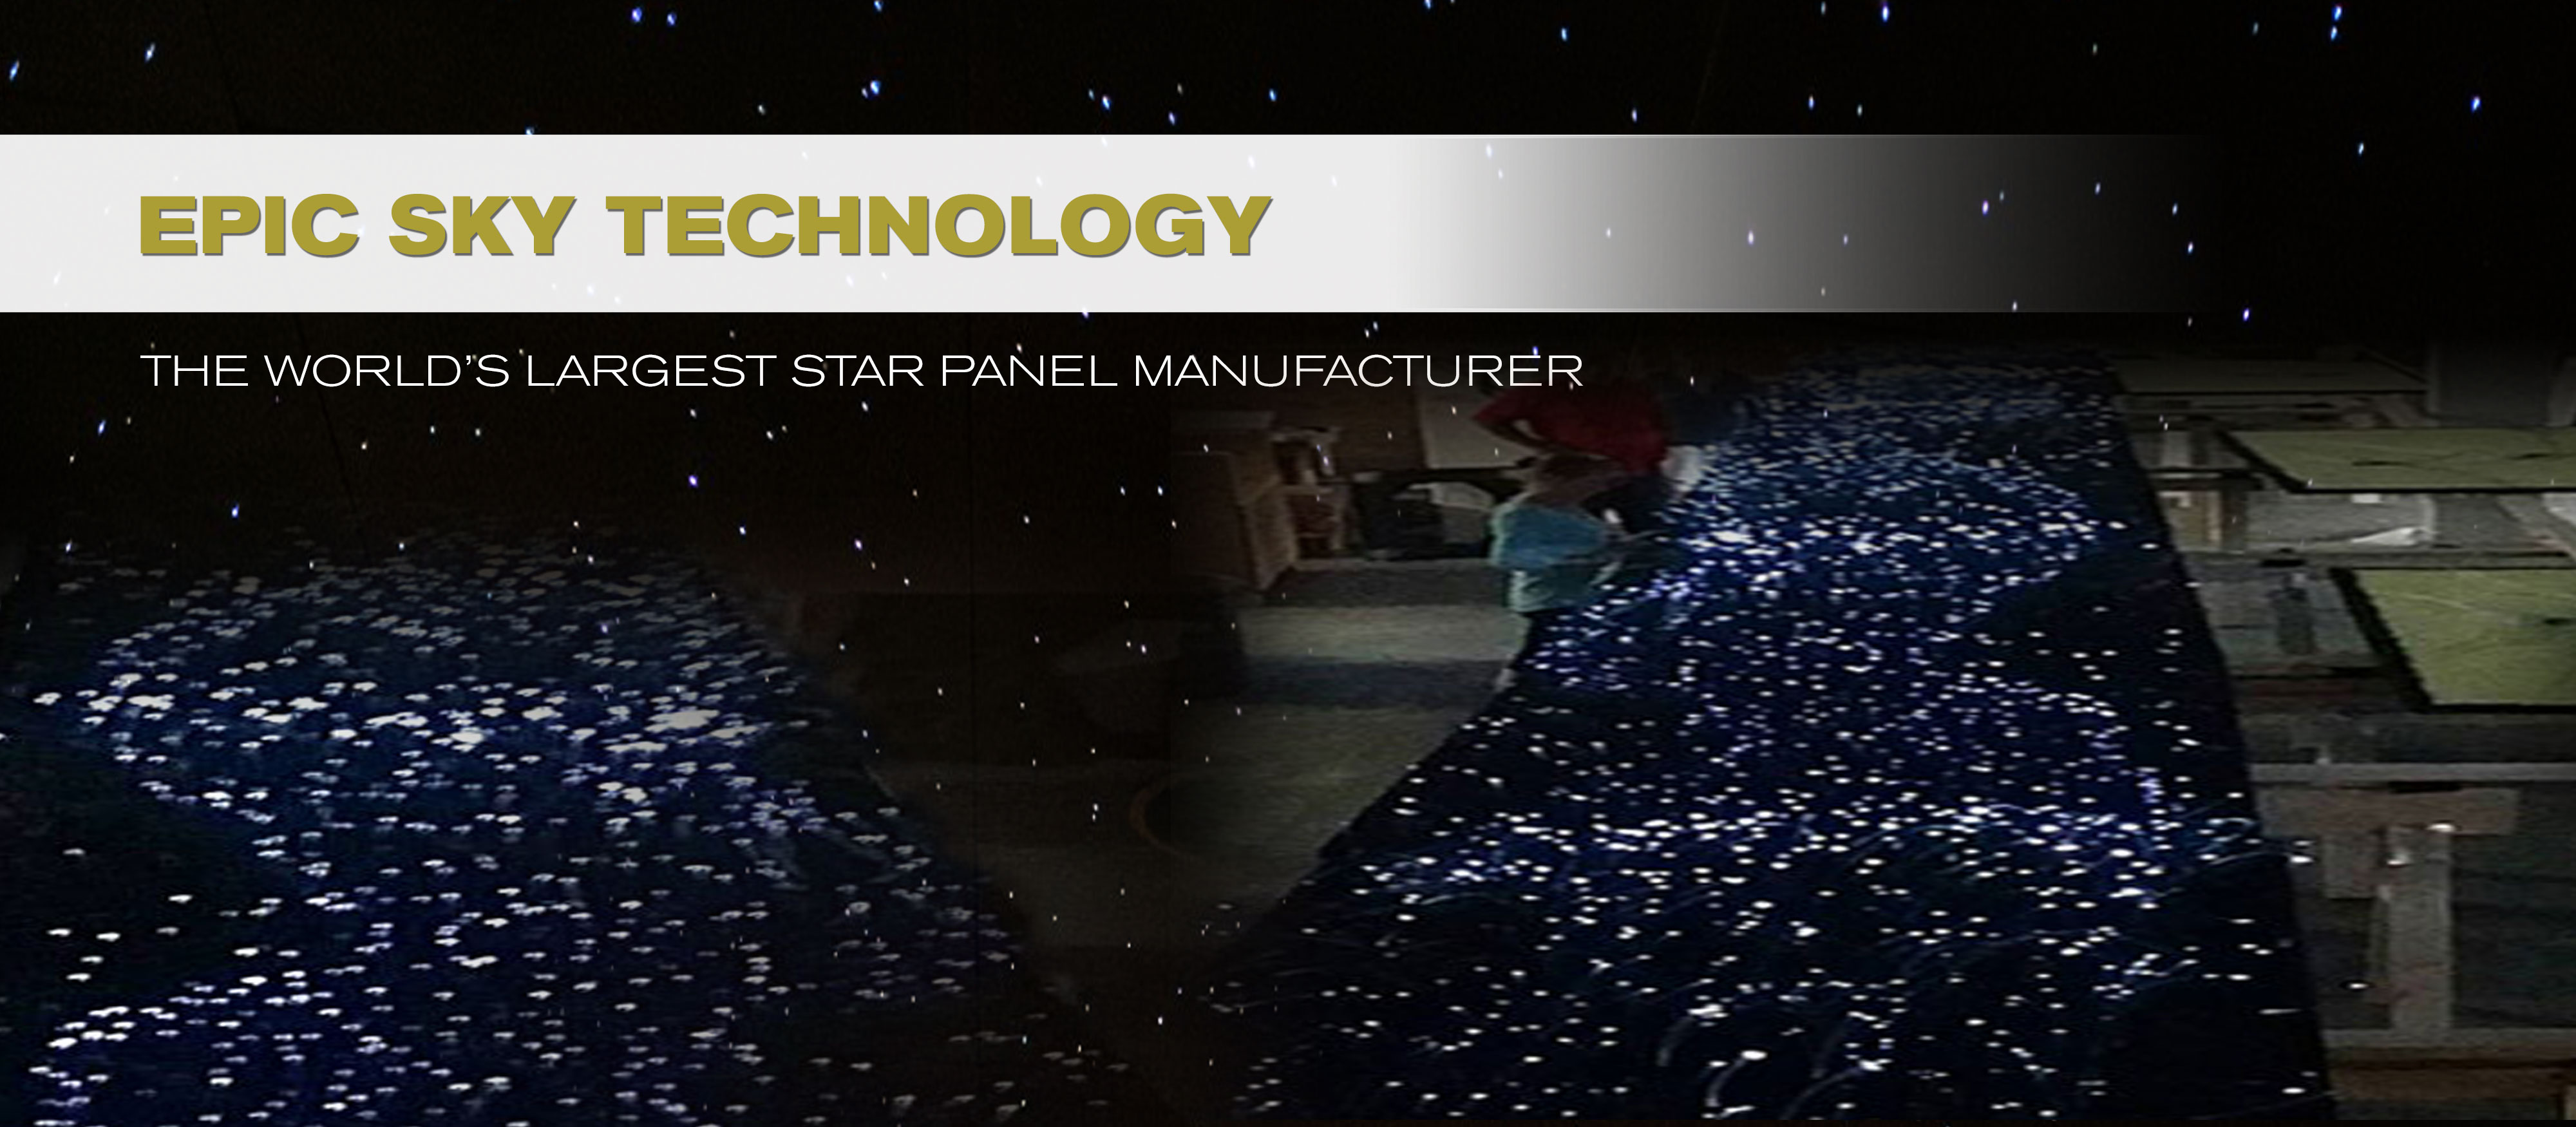 World's largest star panel manufacturer